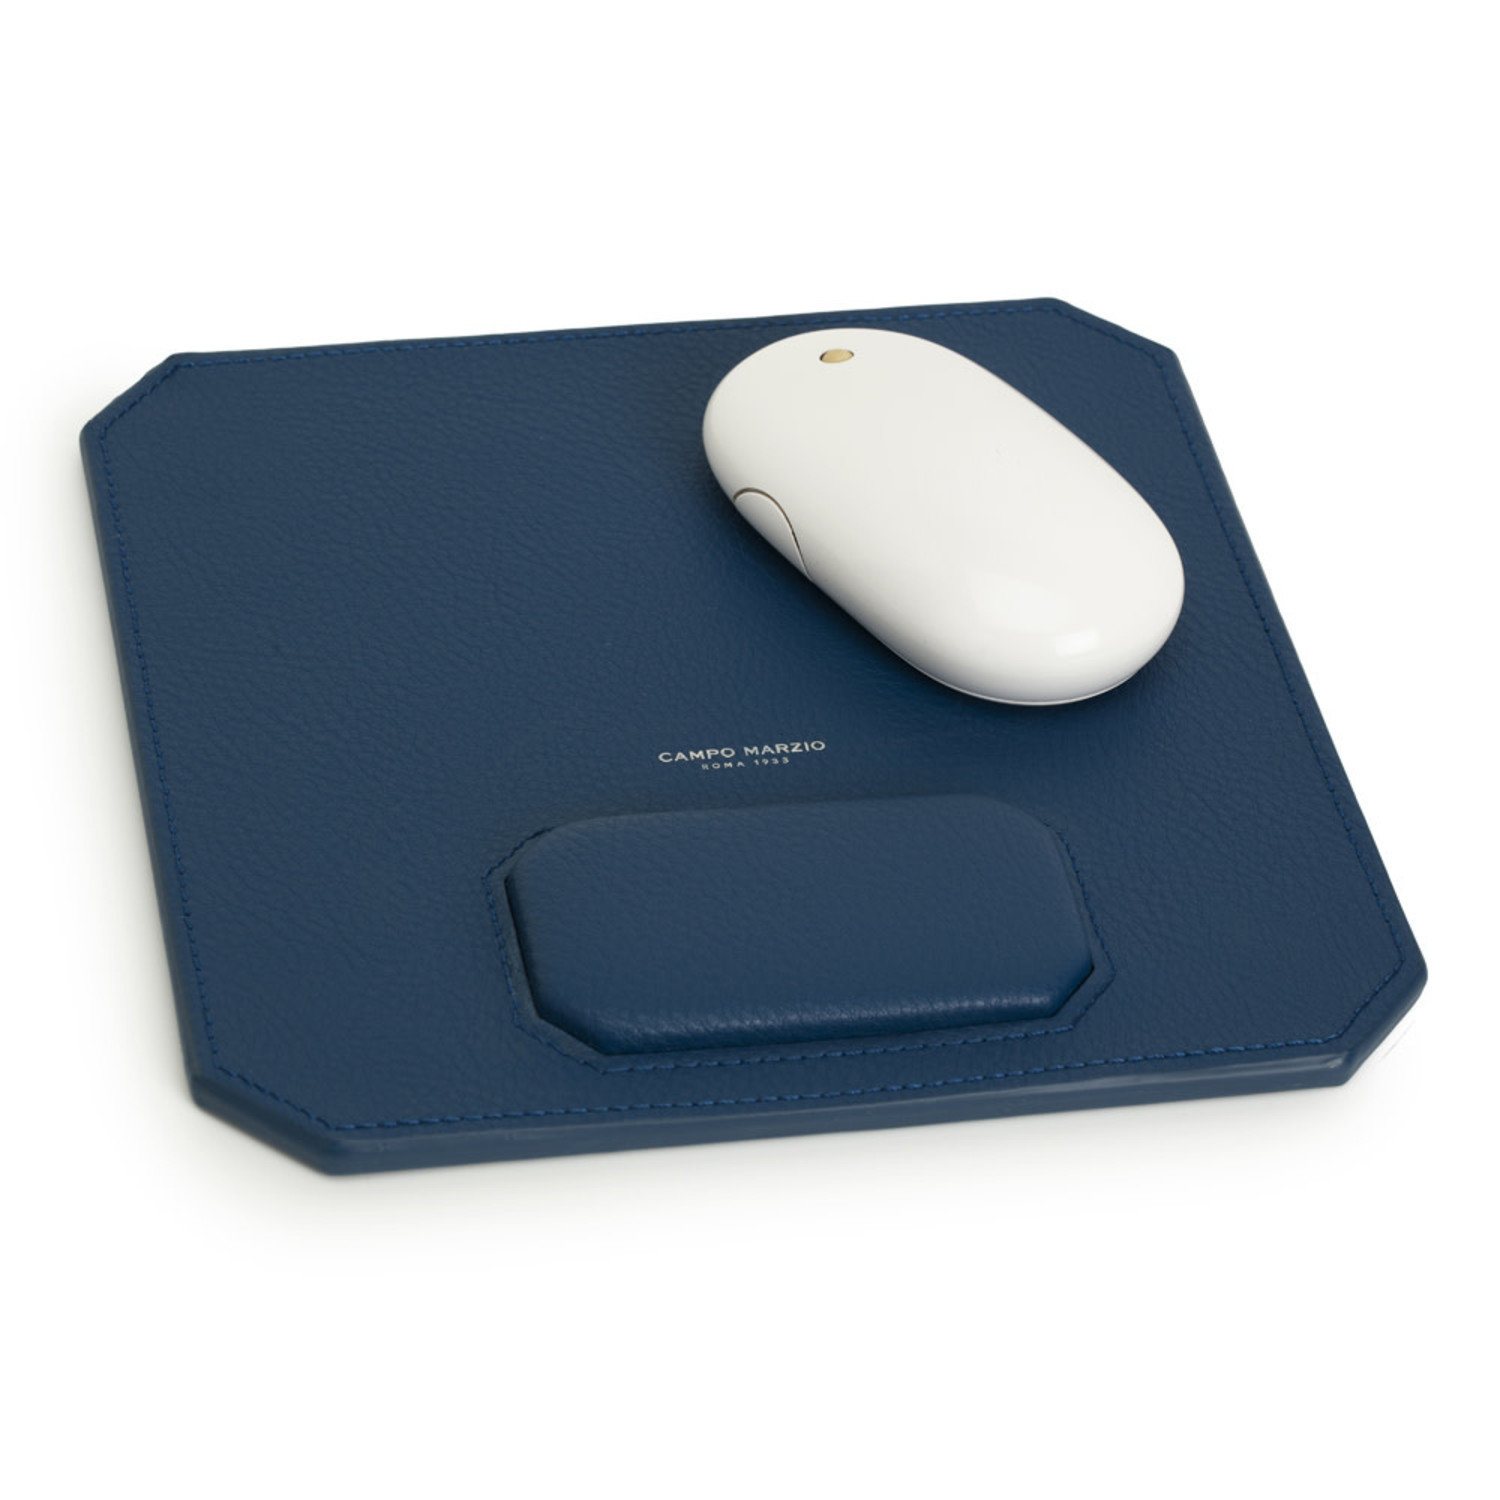 Tutoy 28Cm X 18Cm Bohemia Stile Persiano Tappetino Mouse Pad per Computer  Desktop Pc Laptop : : Informatica